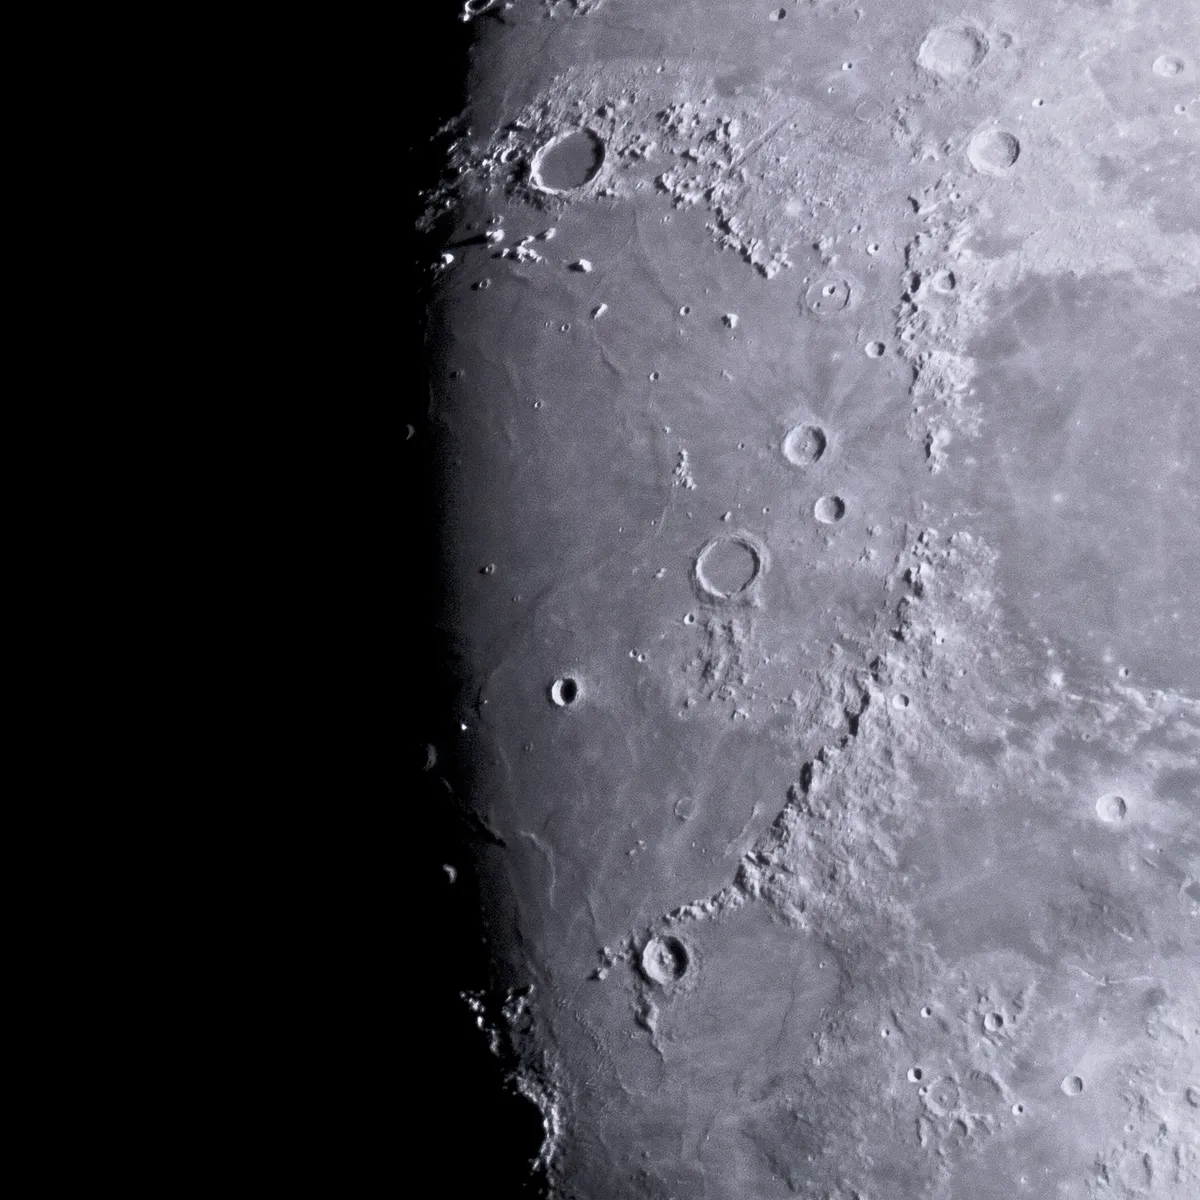 The Moon by Alex Bell, Bath, UK. Equipment: Canon 600D, Atik CLS filter, 8